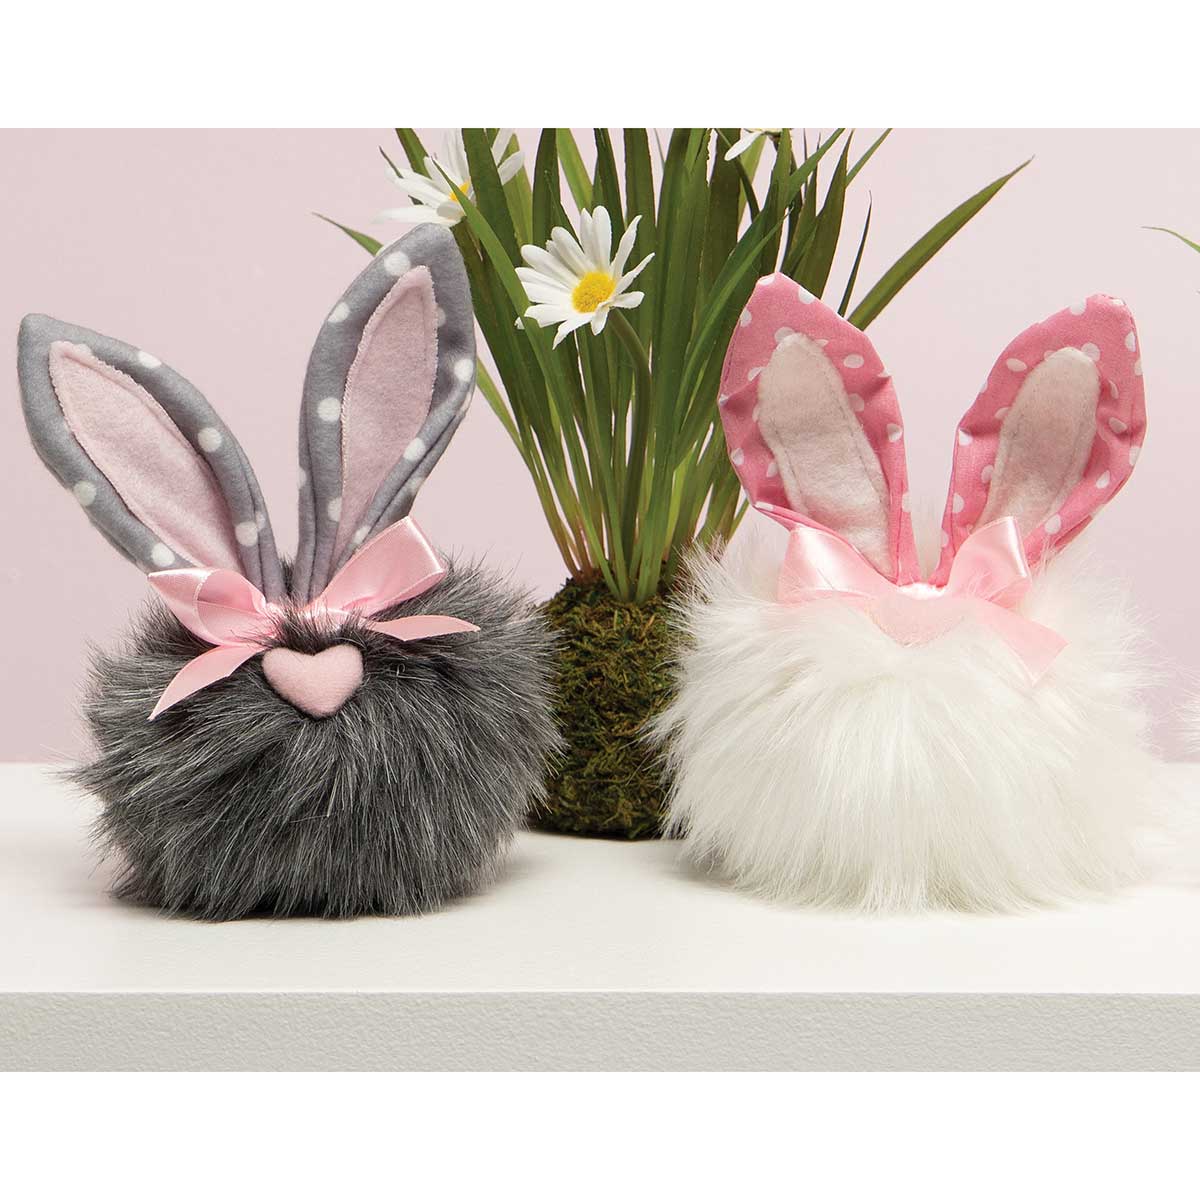 Pindot Cottontails with Polka Dot Bunny Ears